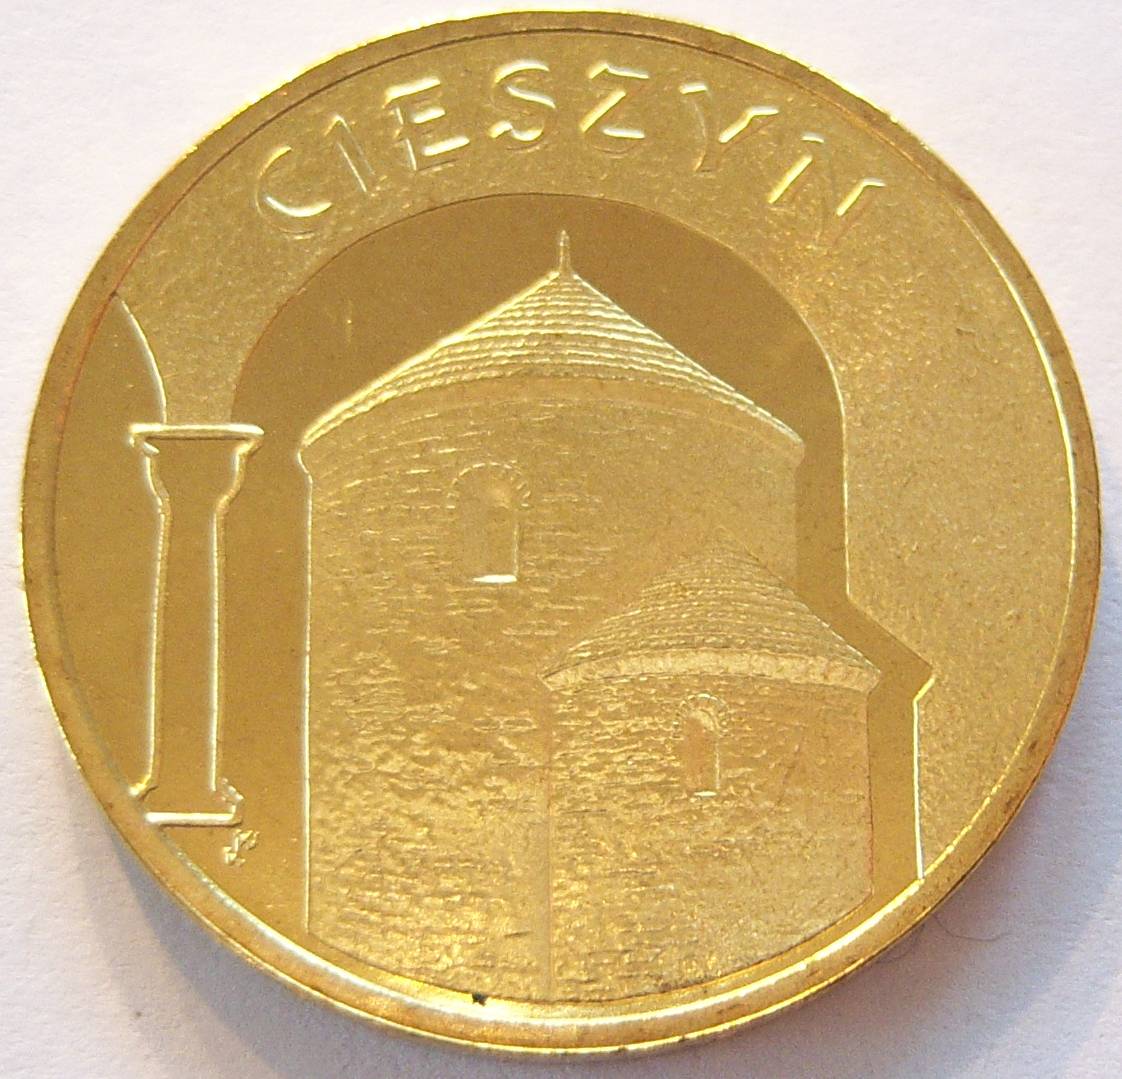  Polen 2 Zloty Zlote 2005 Cieszyn   